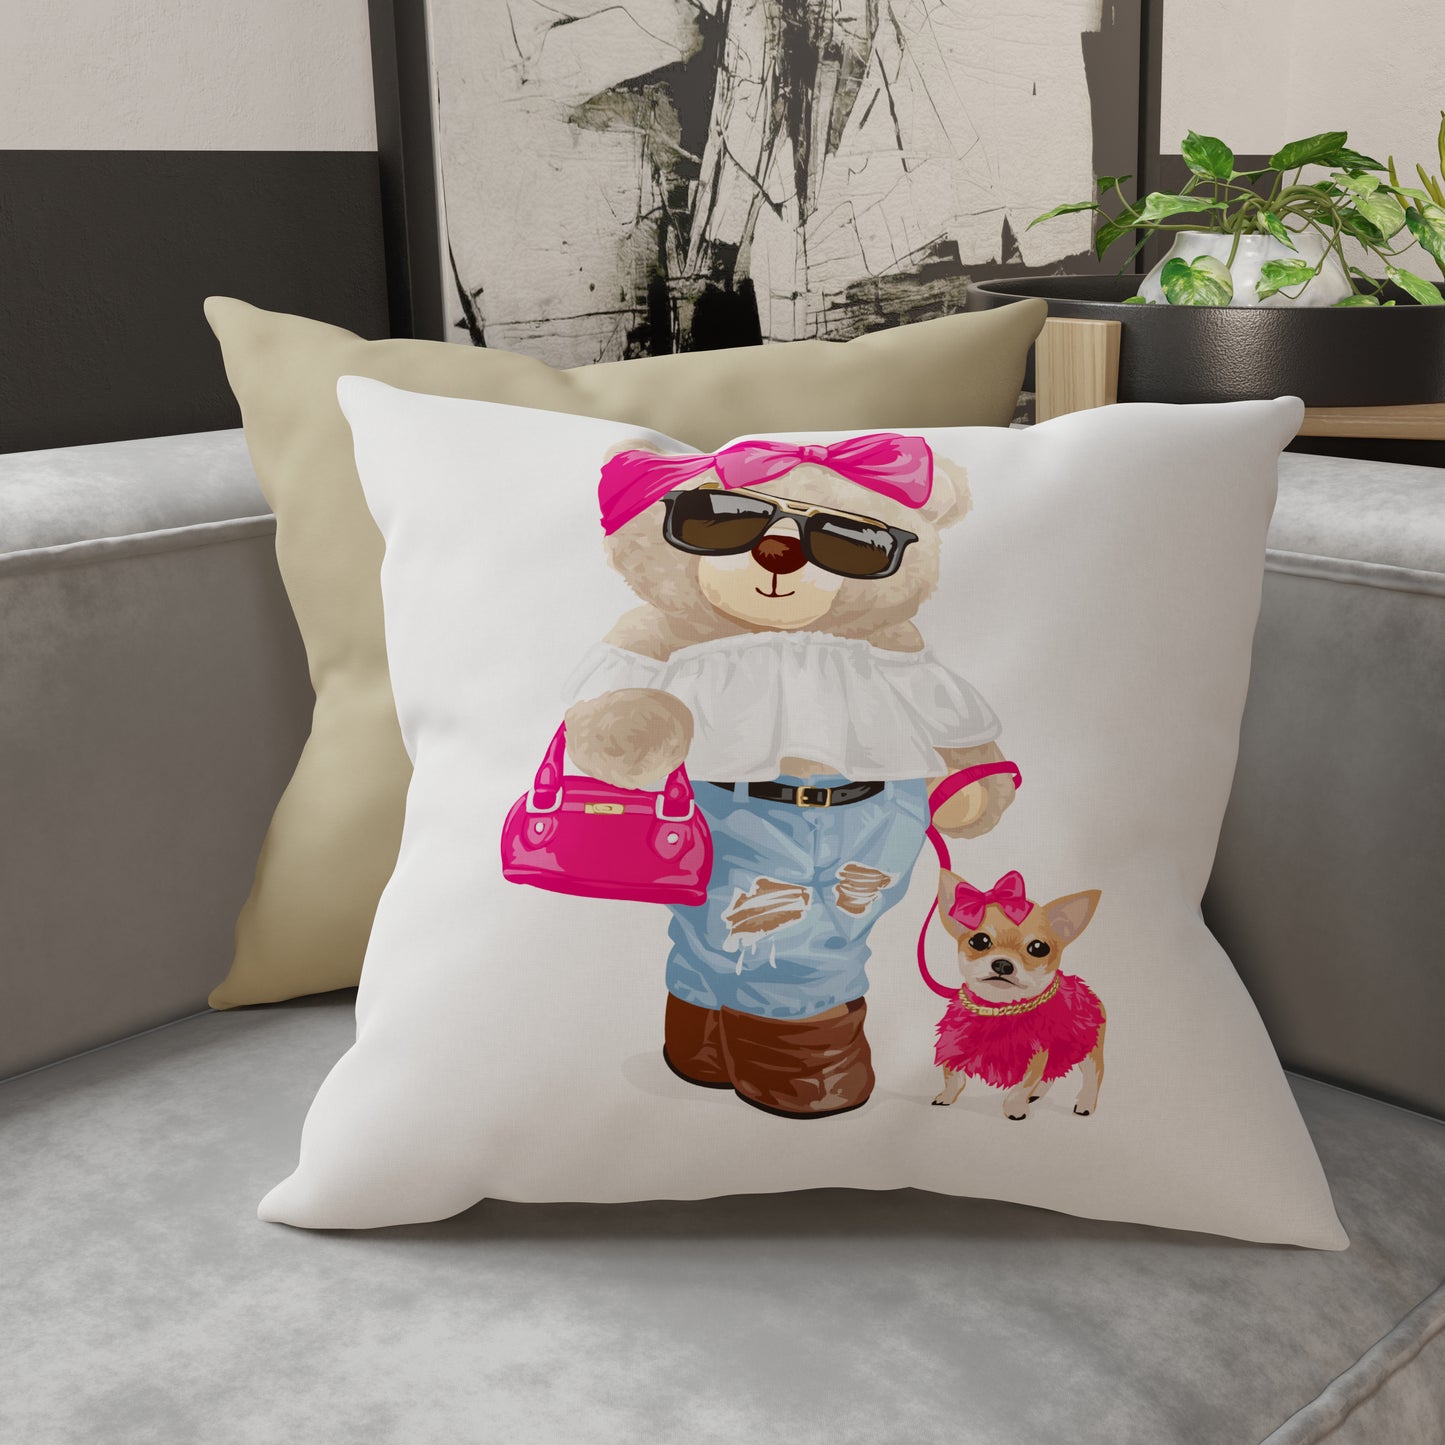 Cushions, Sofa Cushion Covers, Furnishing Cushions in Teddy Cool Girl Digital Print